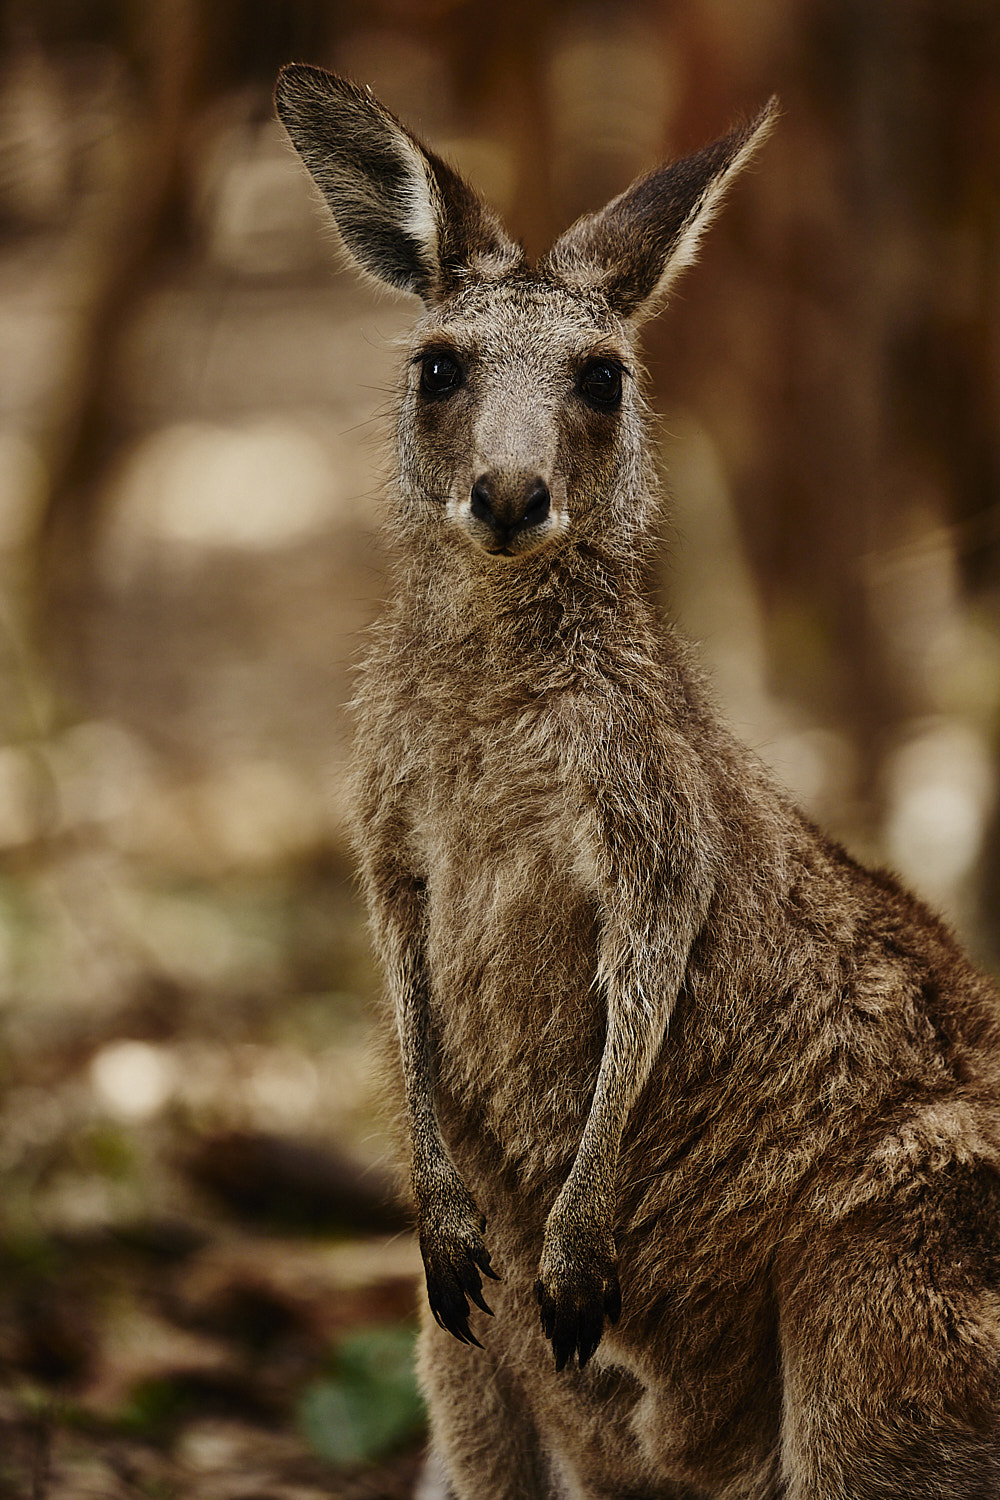 Wild Kangaroos and Koalas a plenty